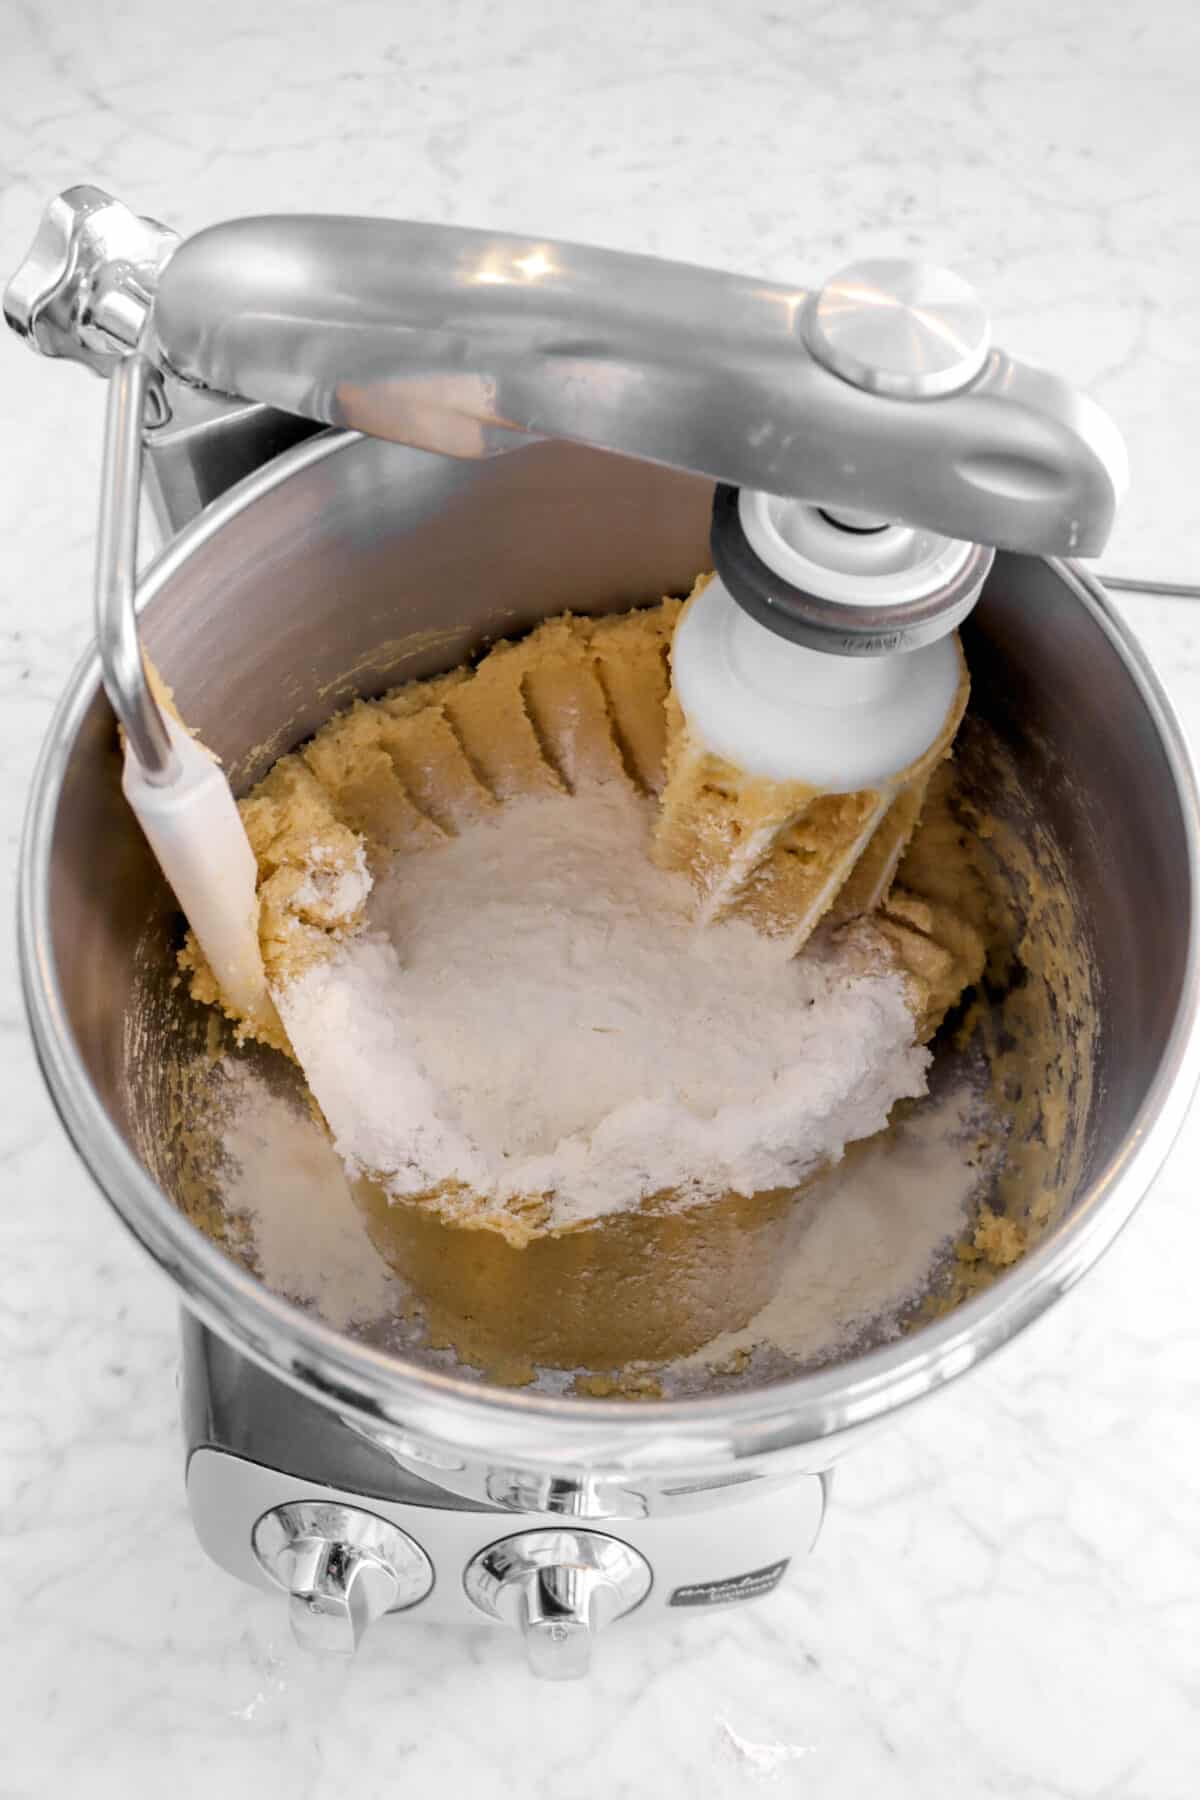 flour added to butter mixture